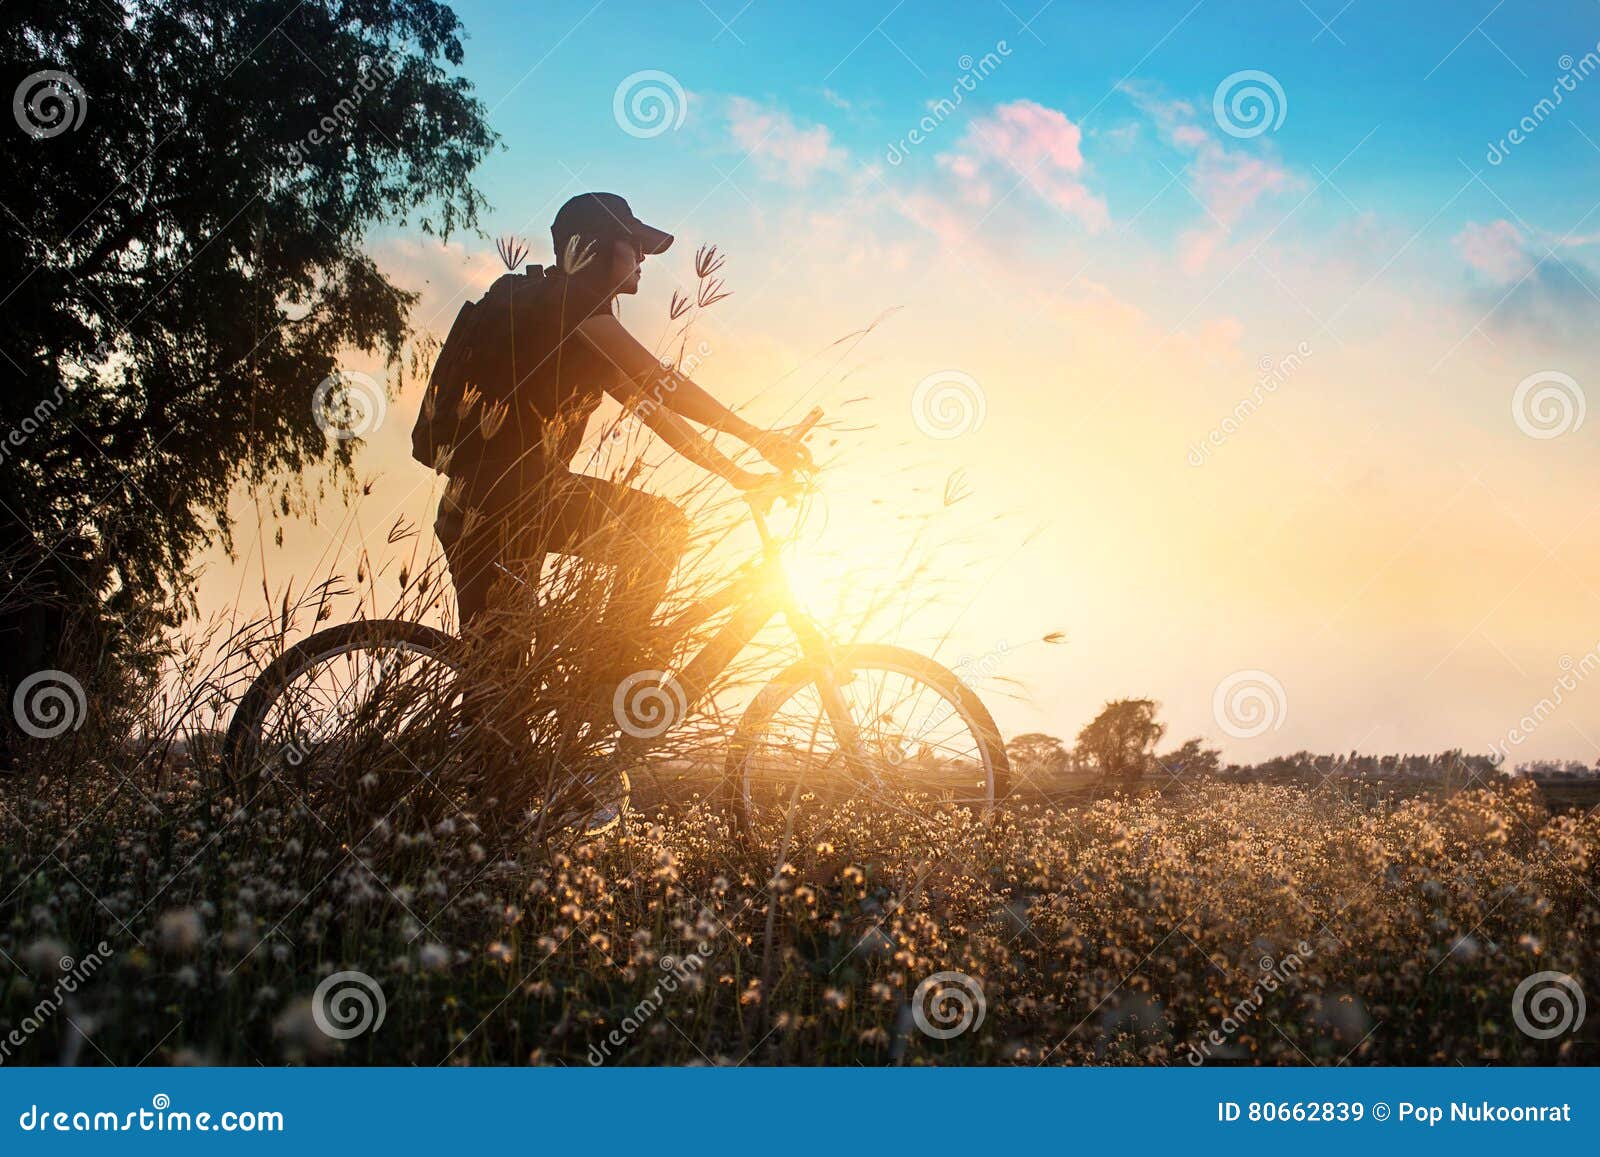 biker on mountain bike adventure in beautiful flowers nature of summer sunset